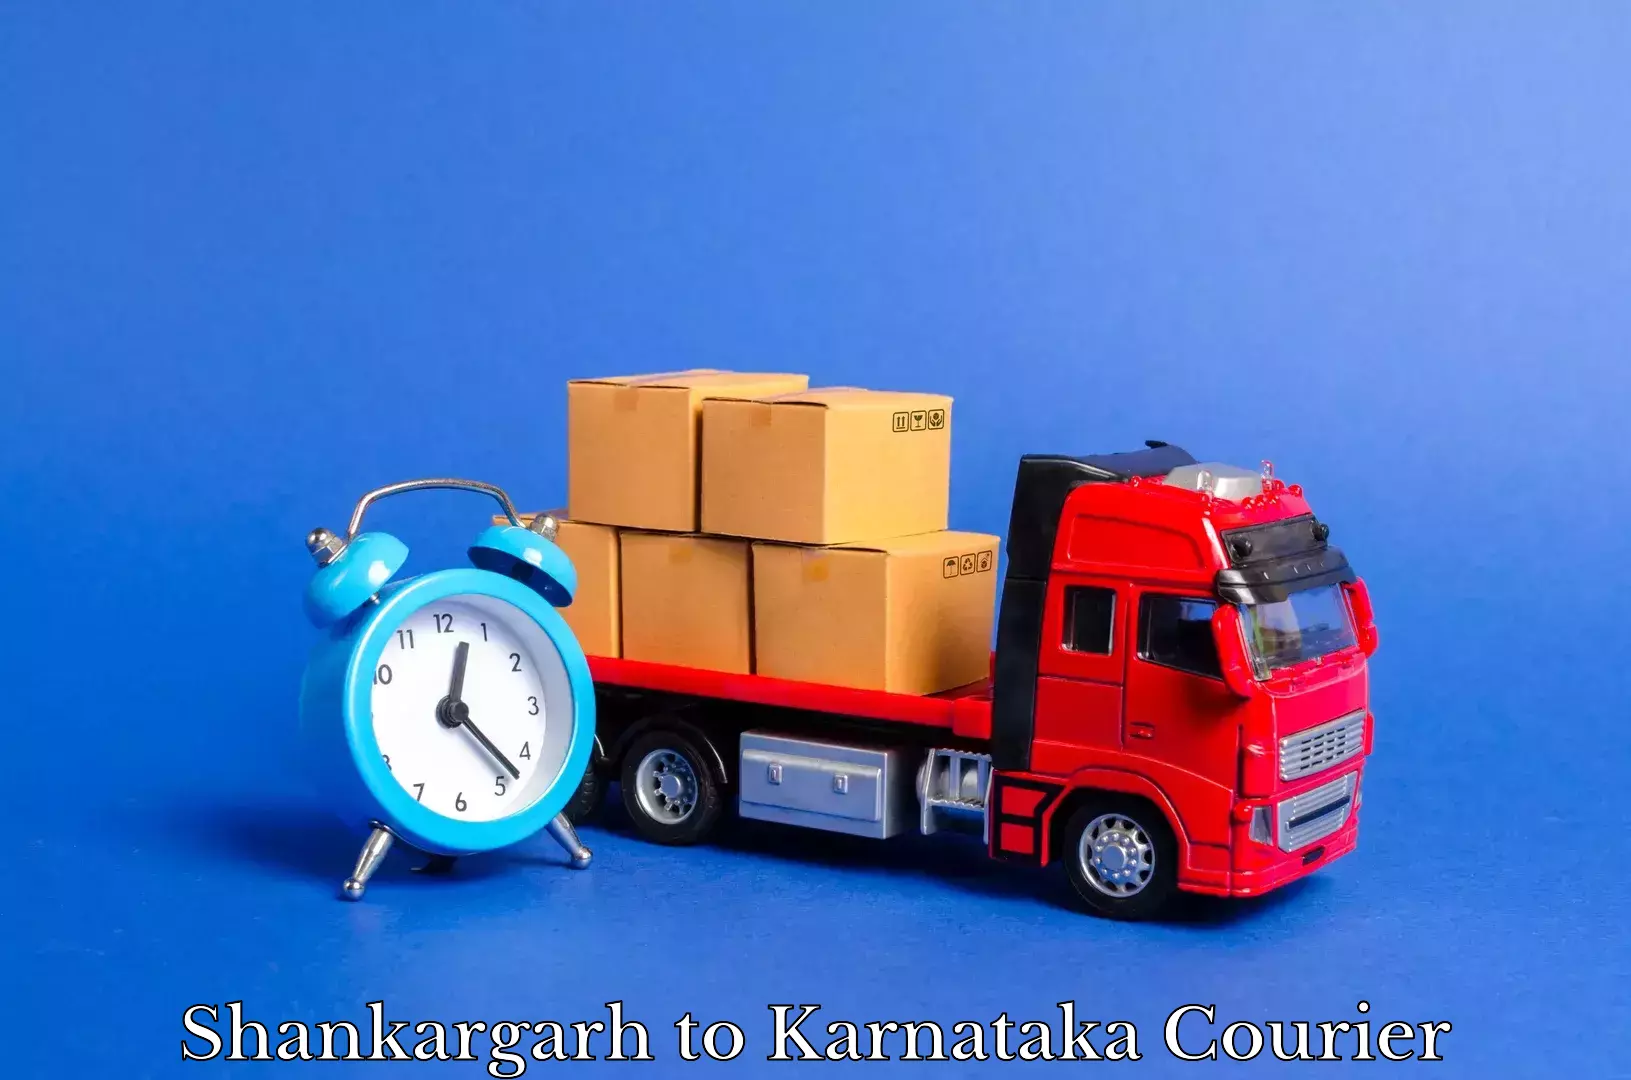 Furniture delivery service Shankargarh to Karnataka